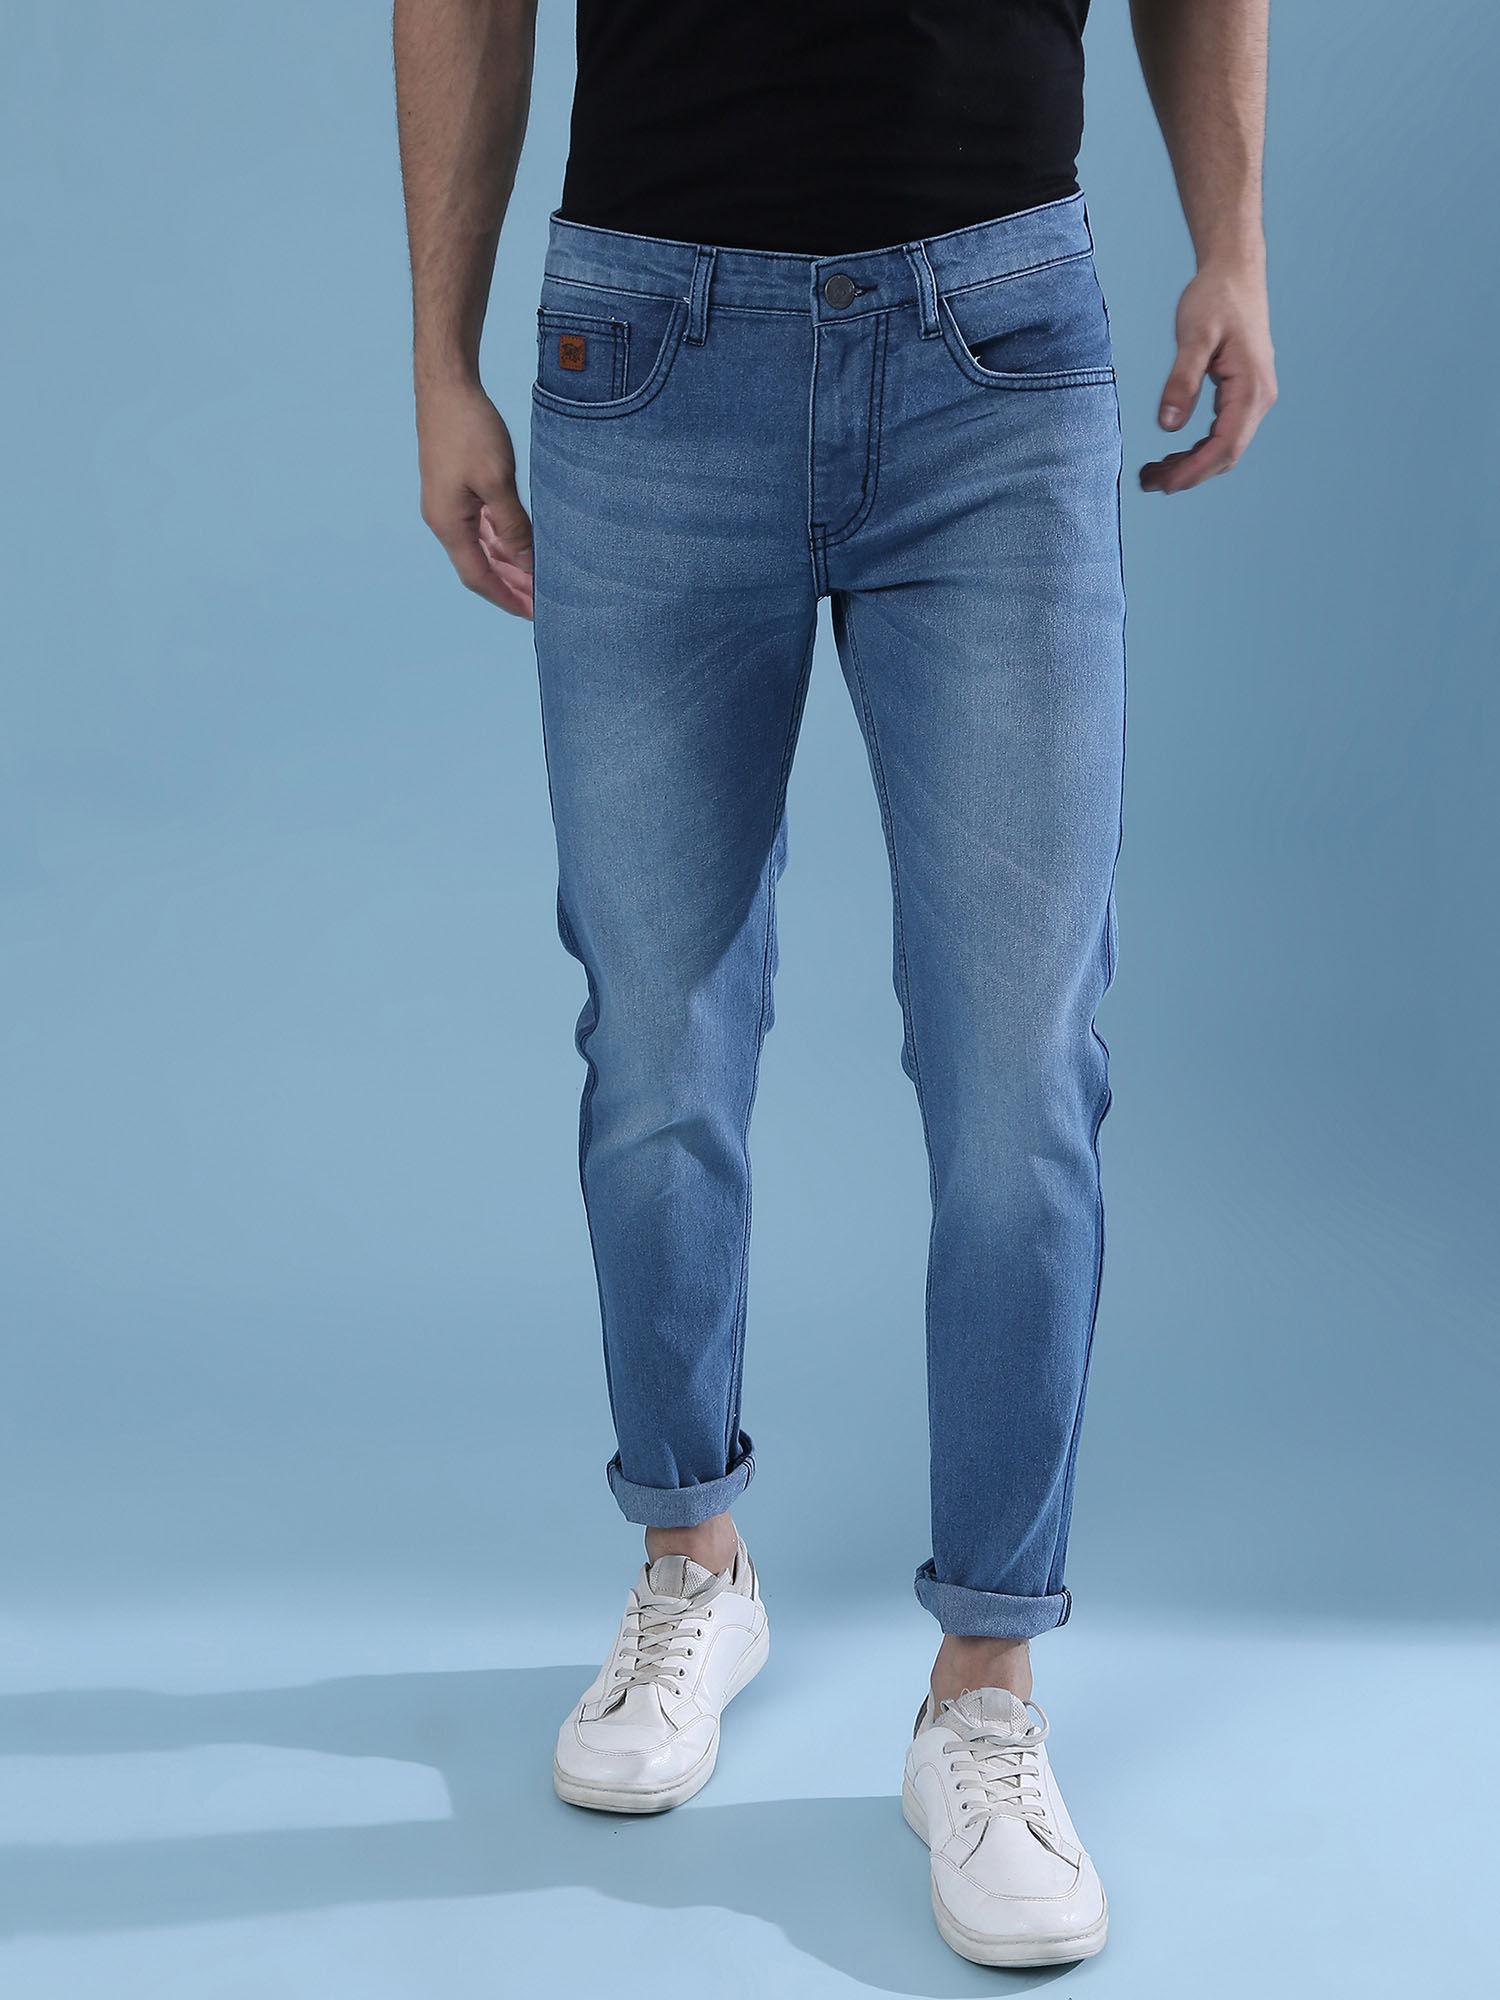 men solid stylish casual denim jeans